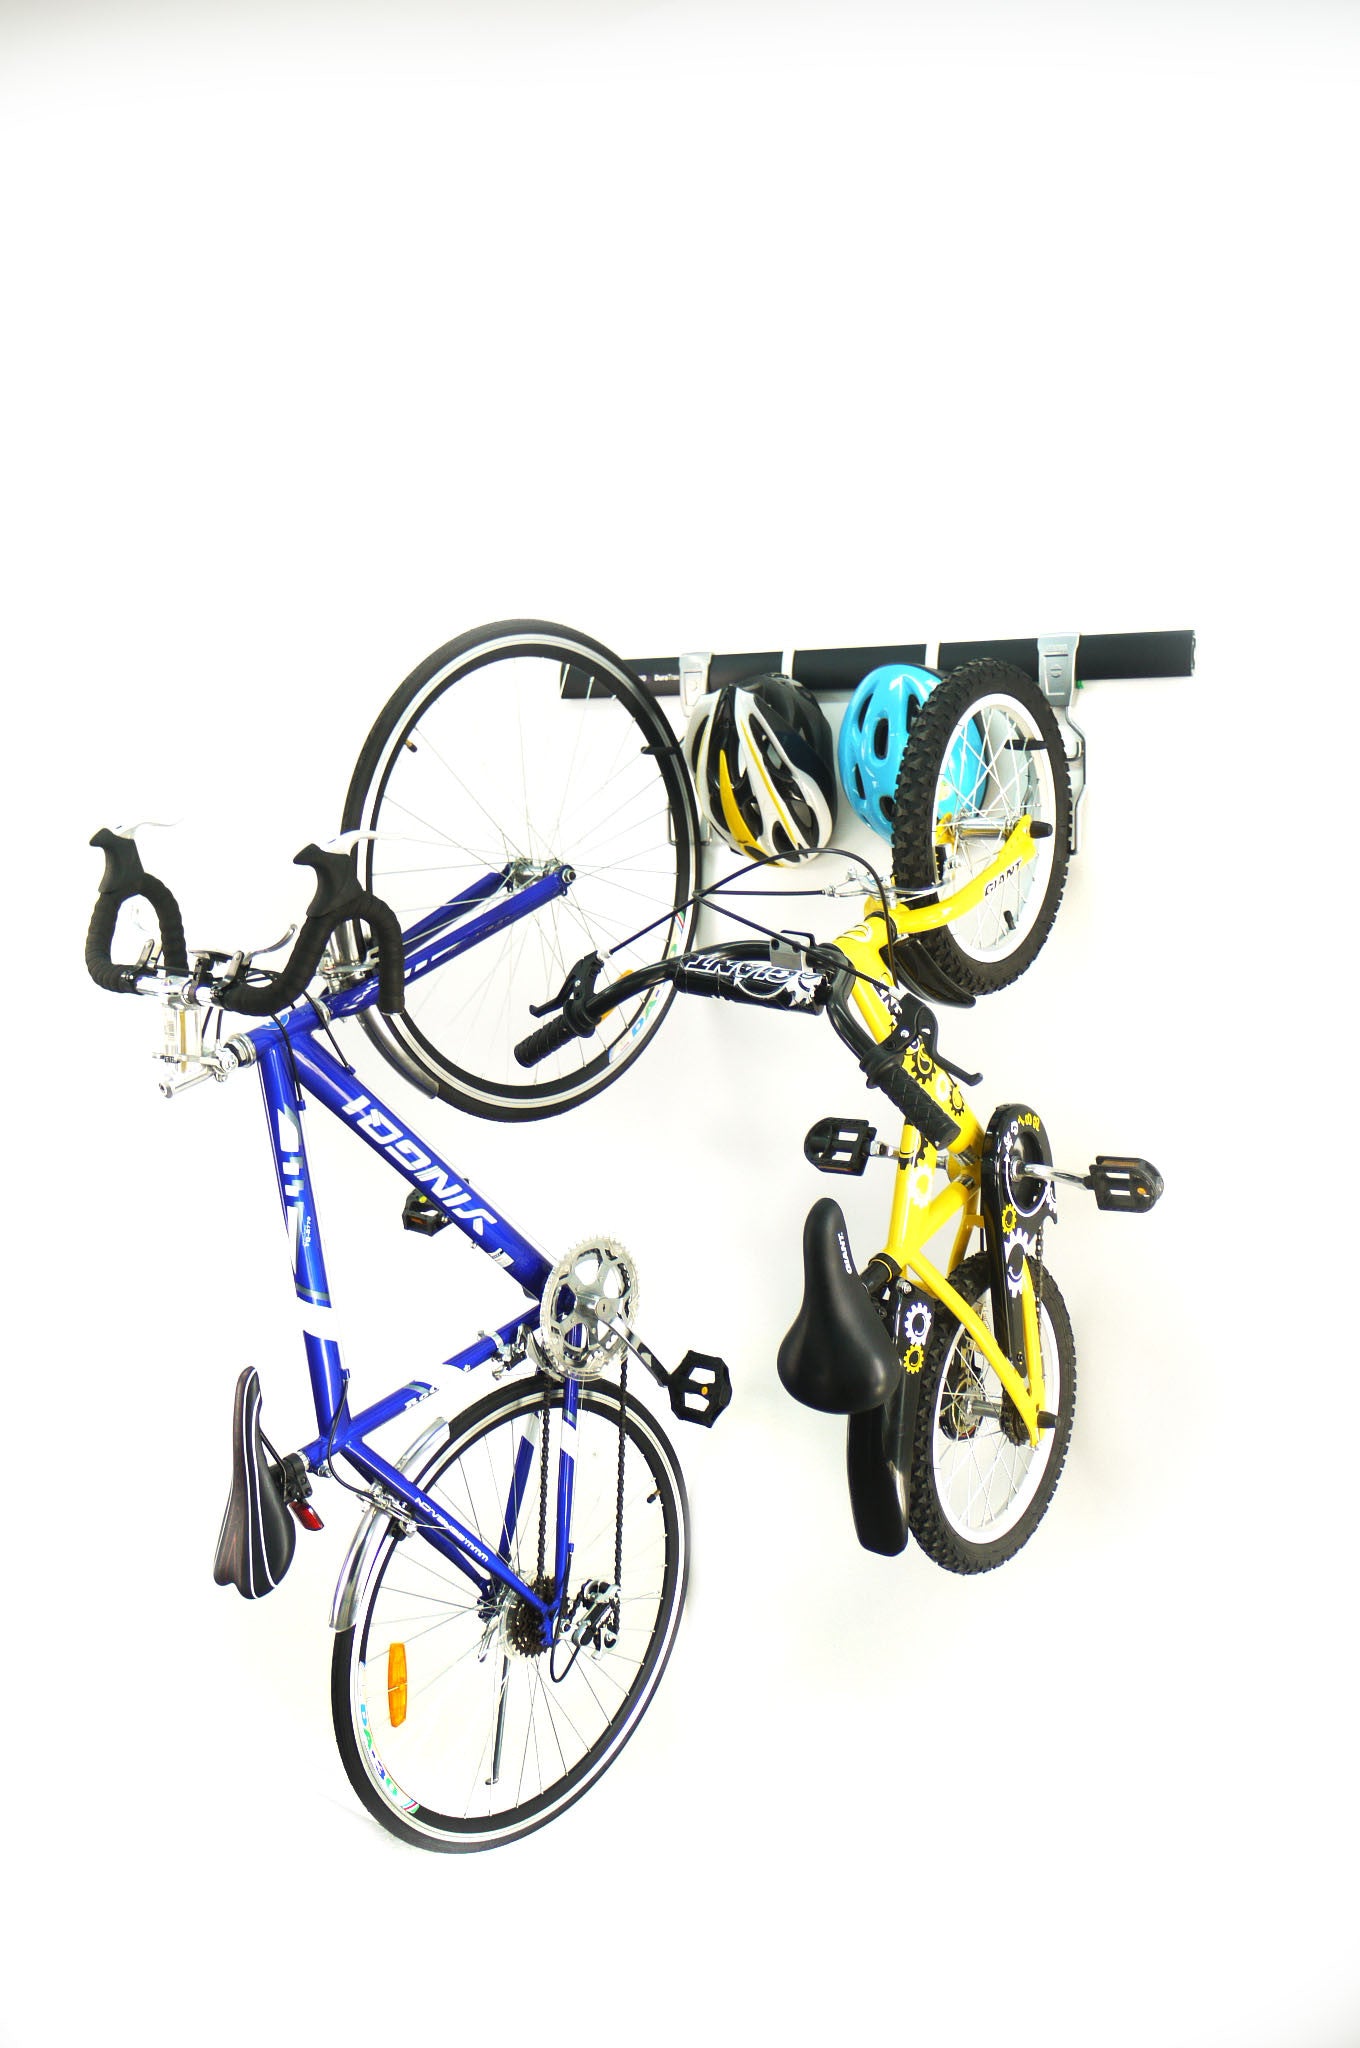 Vertical Bike Hook